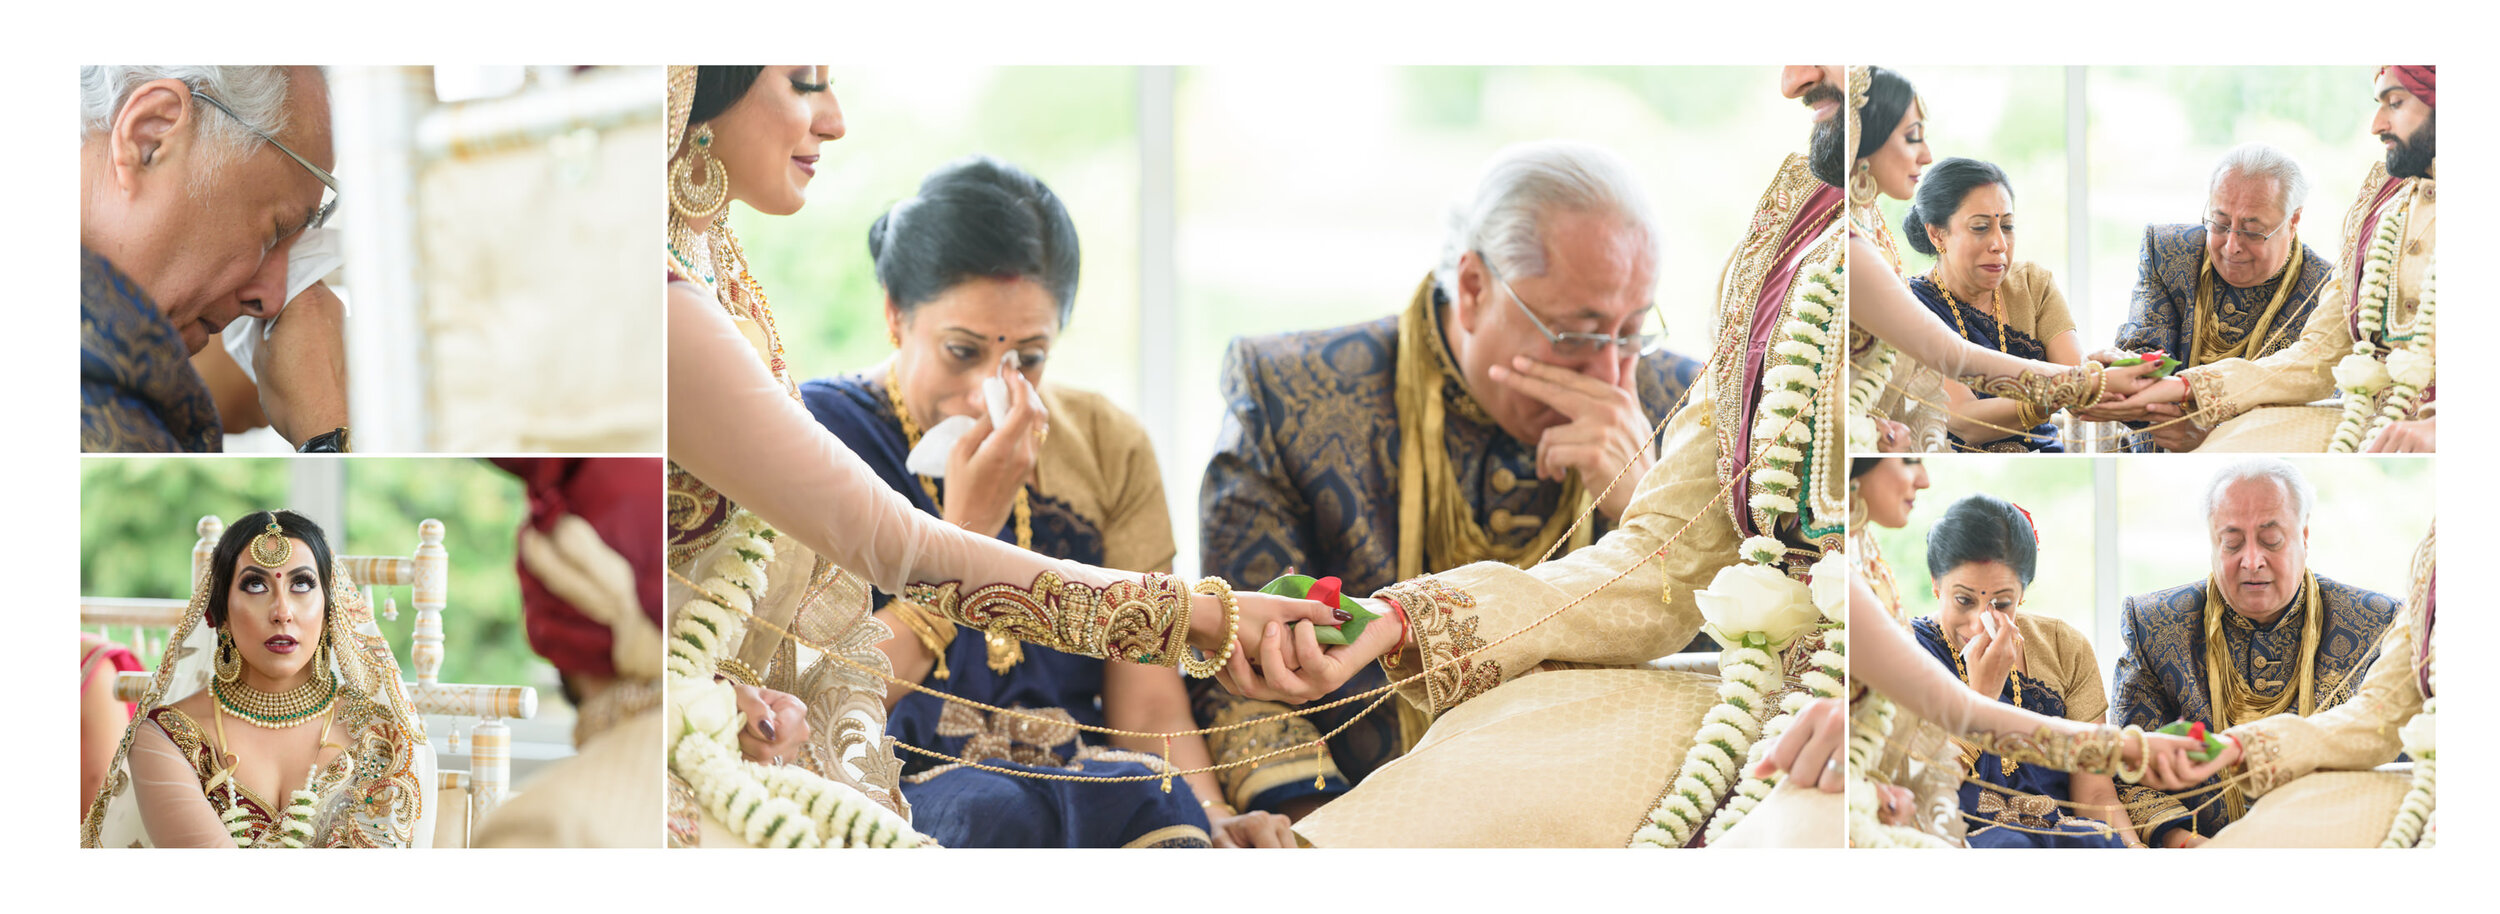 satnam photography luxury hindu wedding album -27.jpg